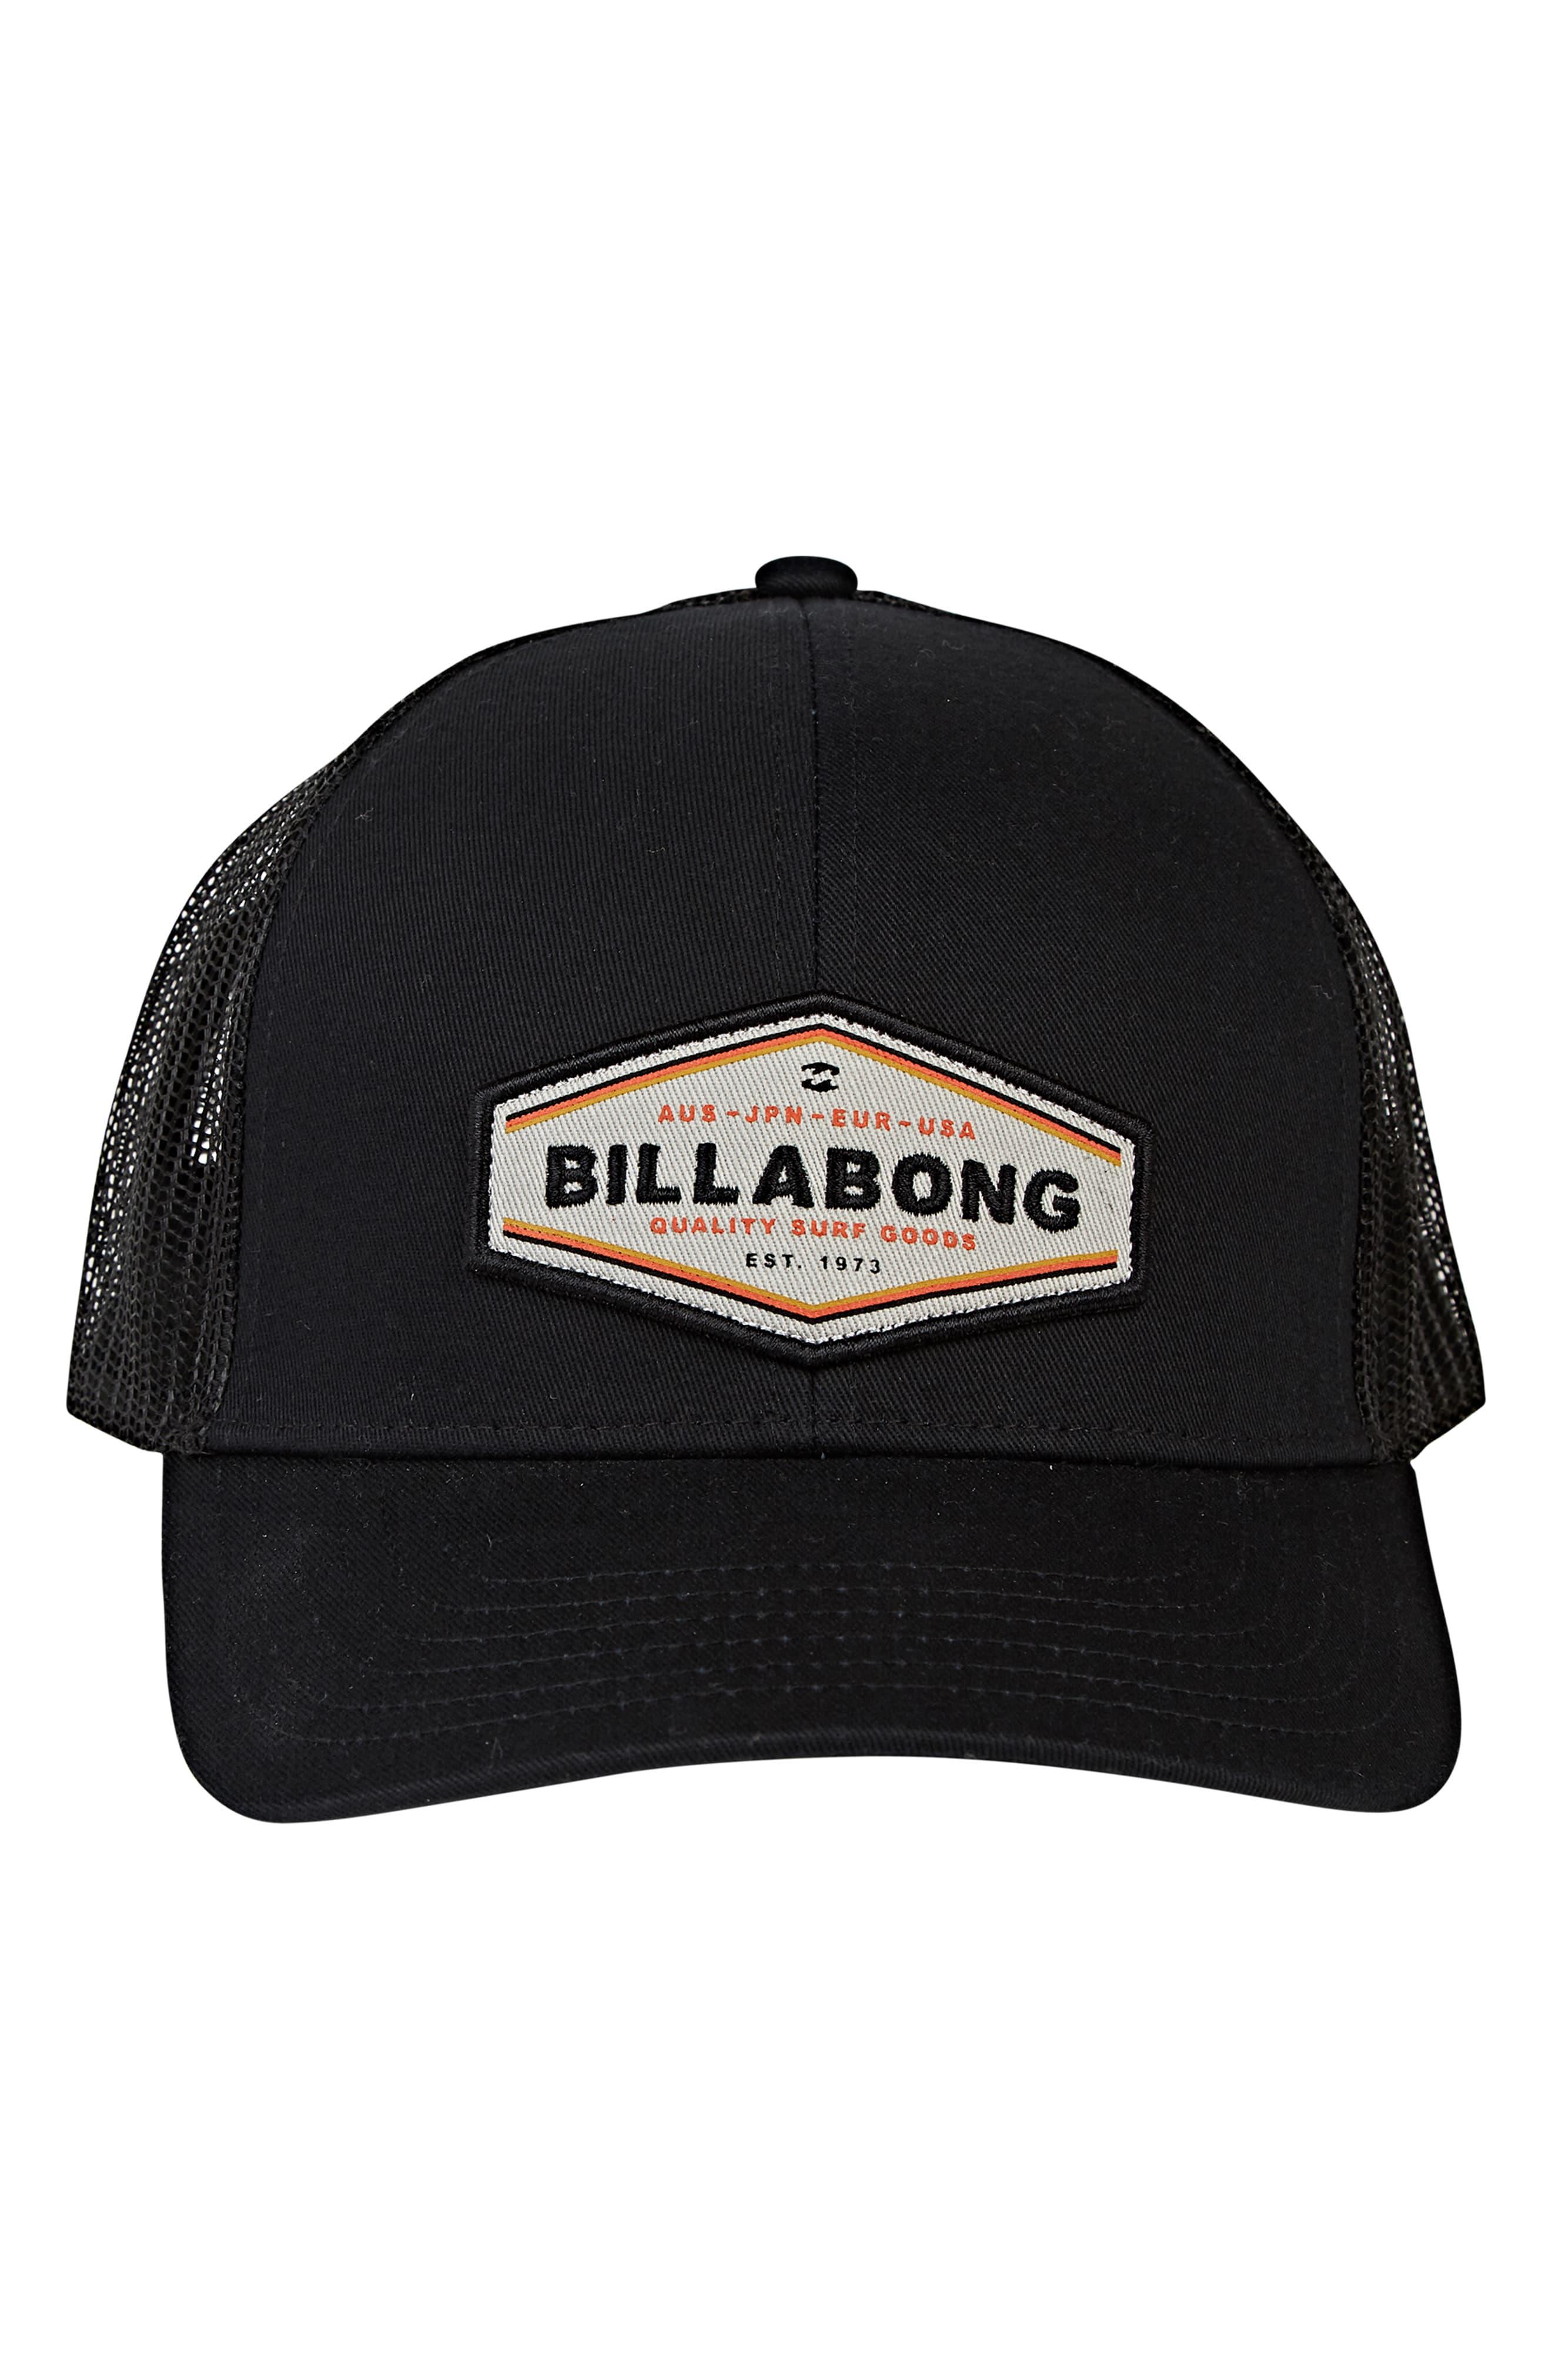 Billabong Trucker Hat in Black for Men - Lyst